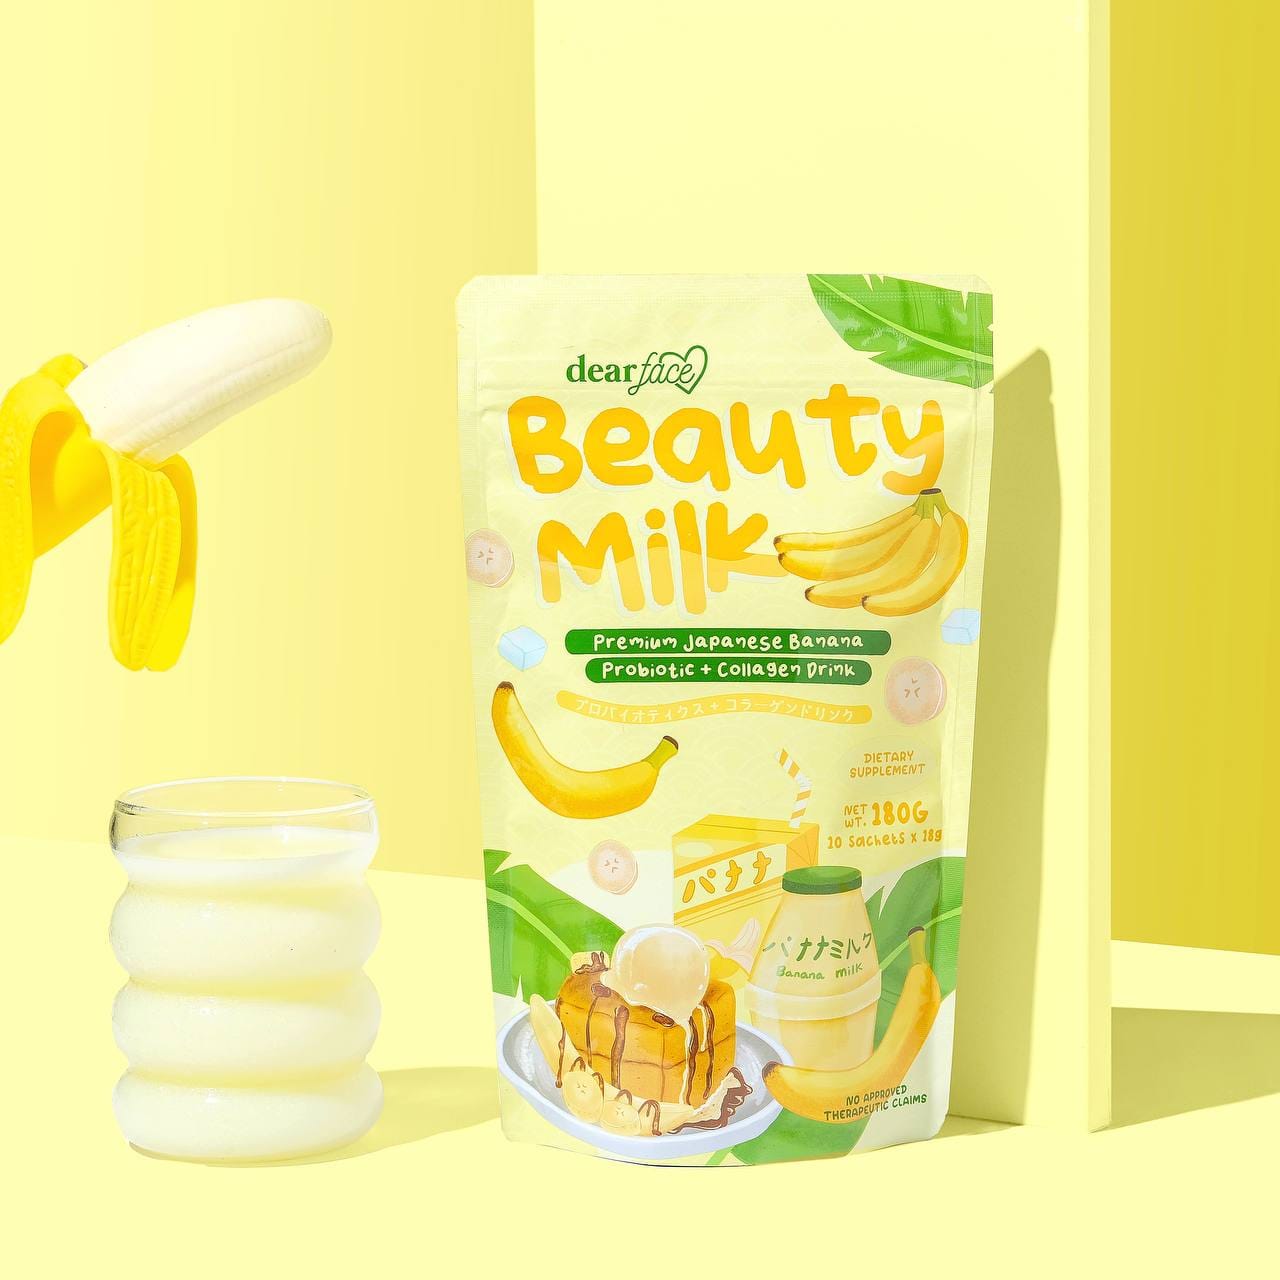 Dear Face Beauty Milk Banana – Dea's Kitchen and Pinoy Delicacies